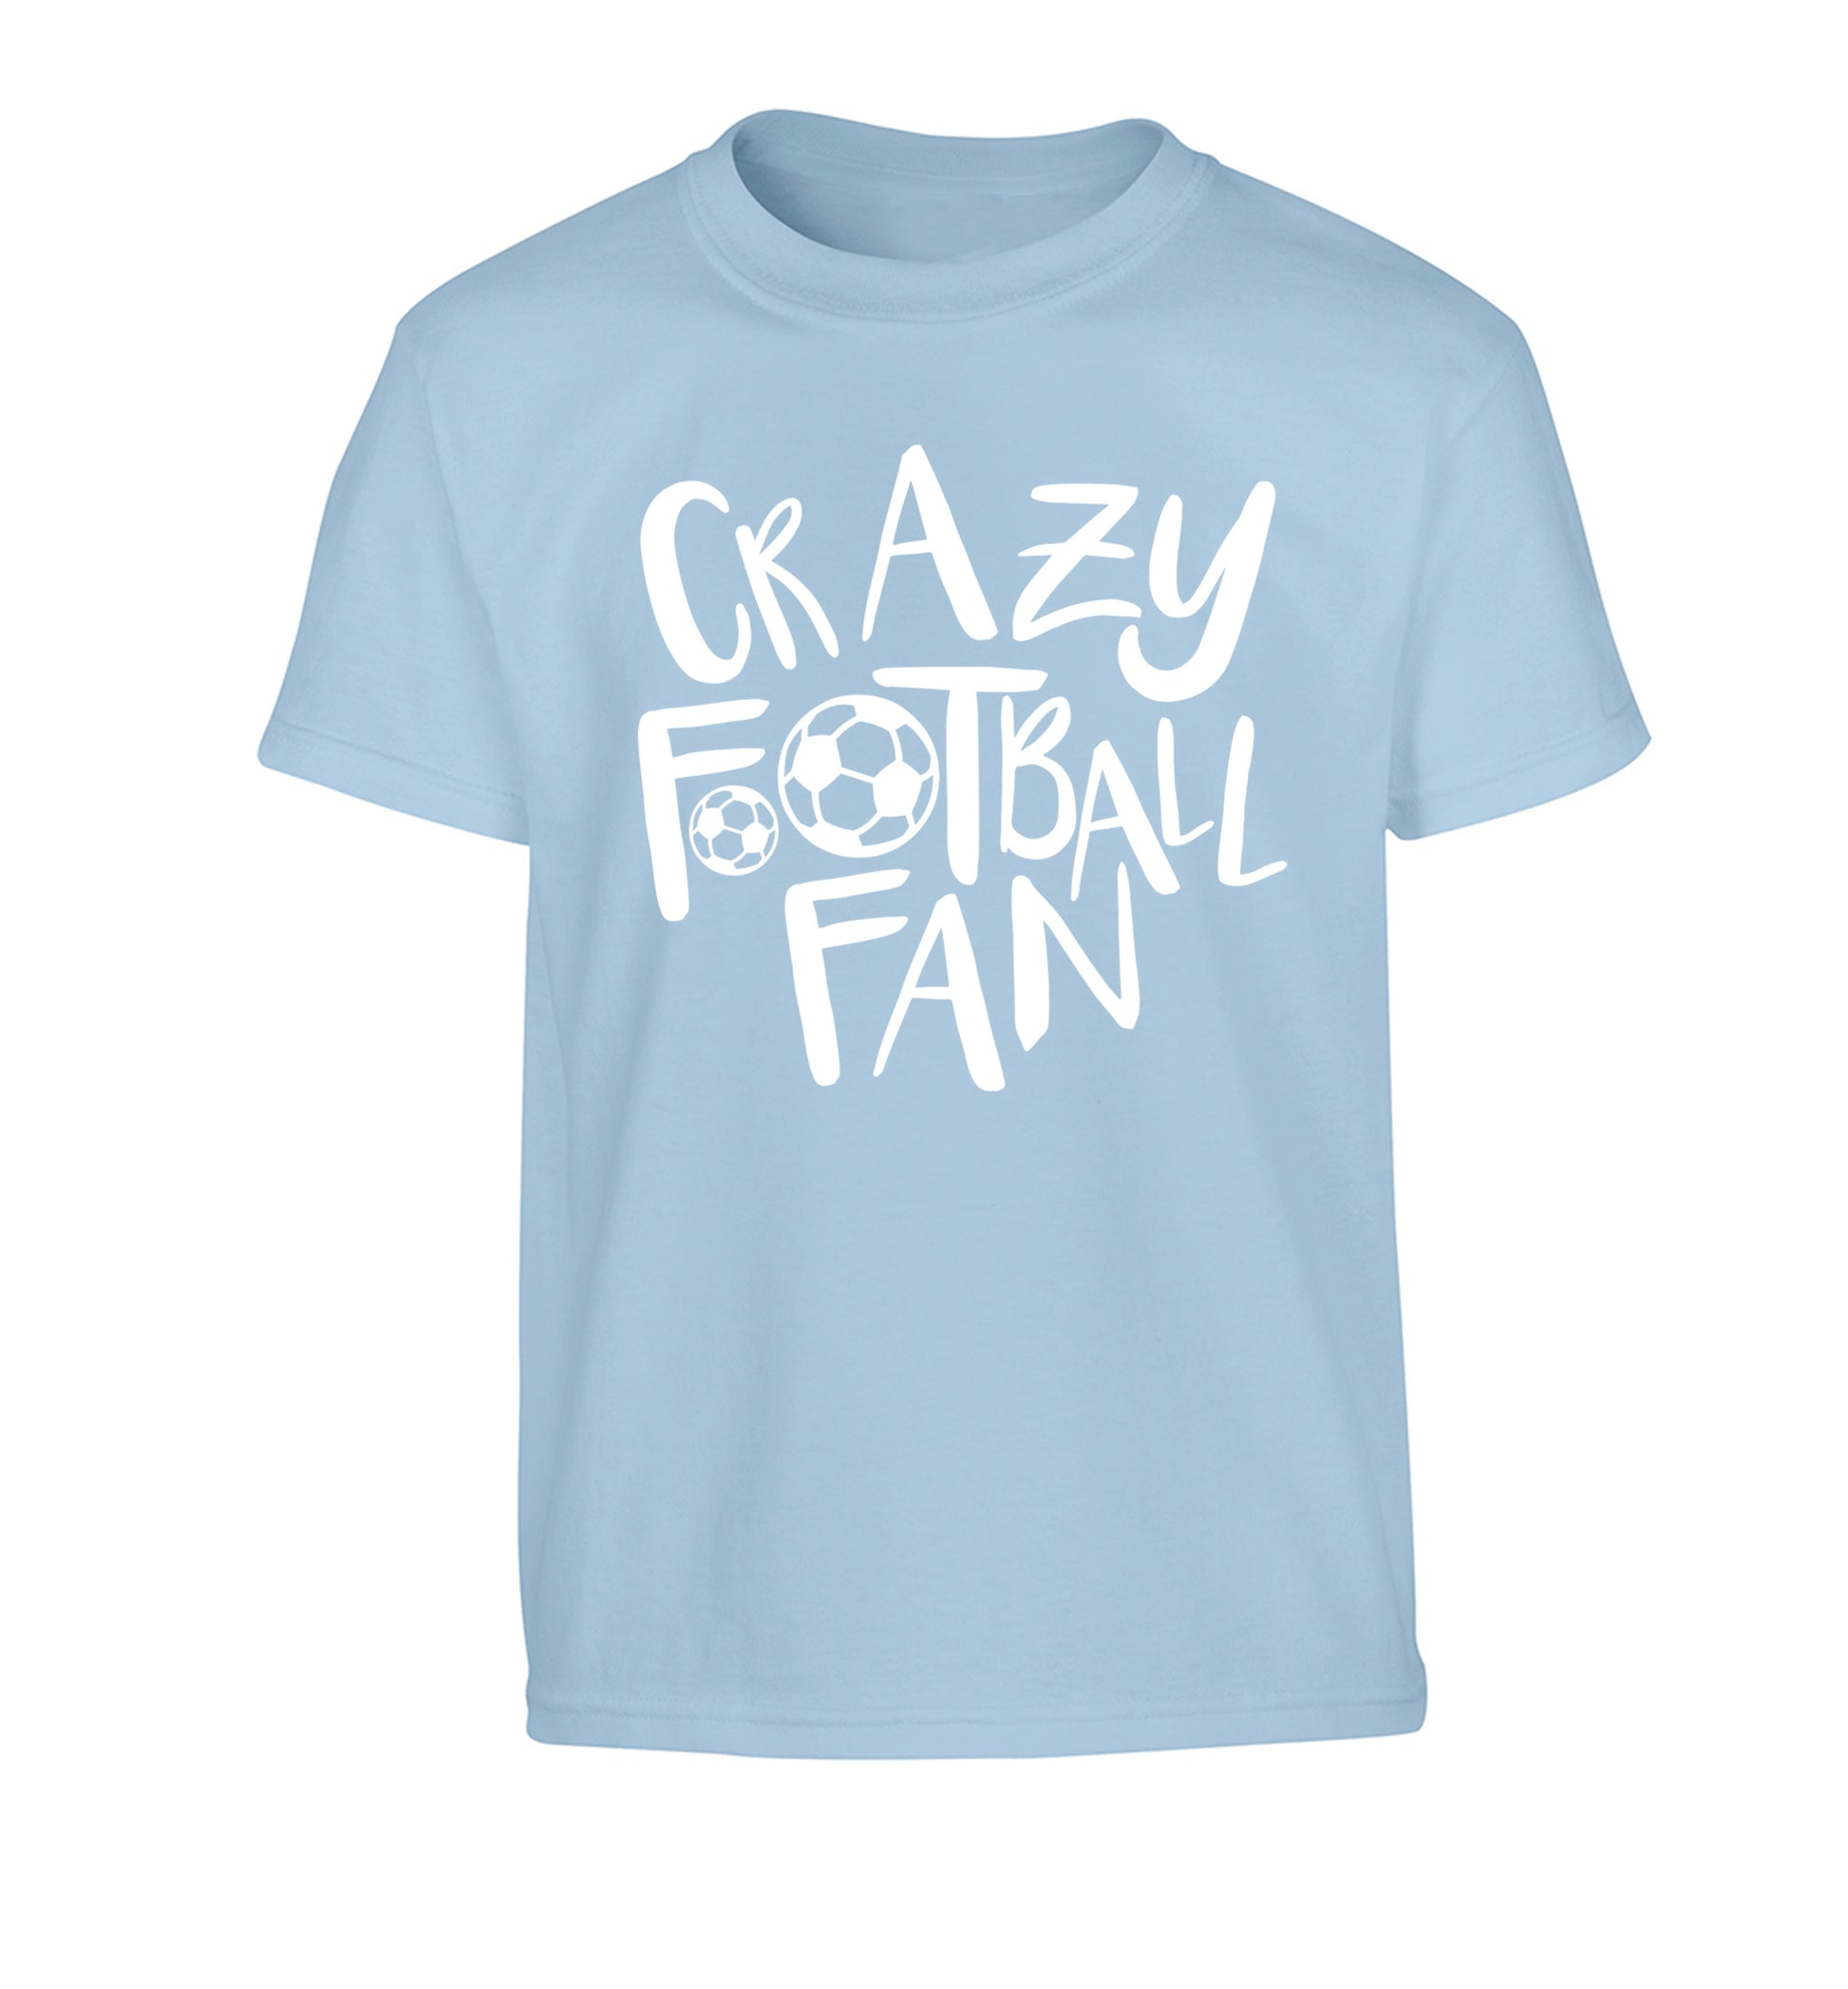 Crazy football fan Children's light blue Tshirt 12-14 Years